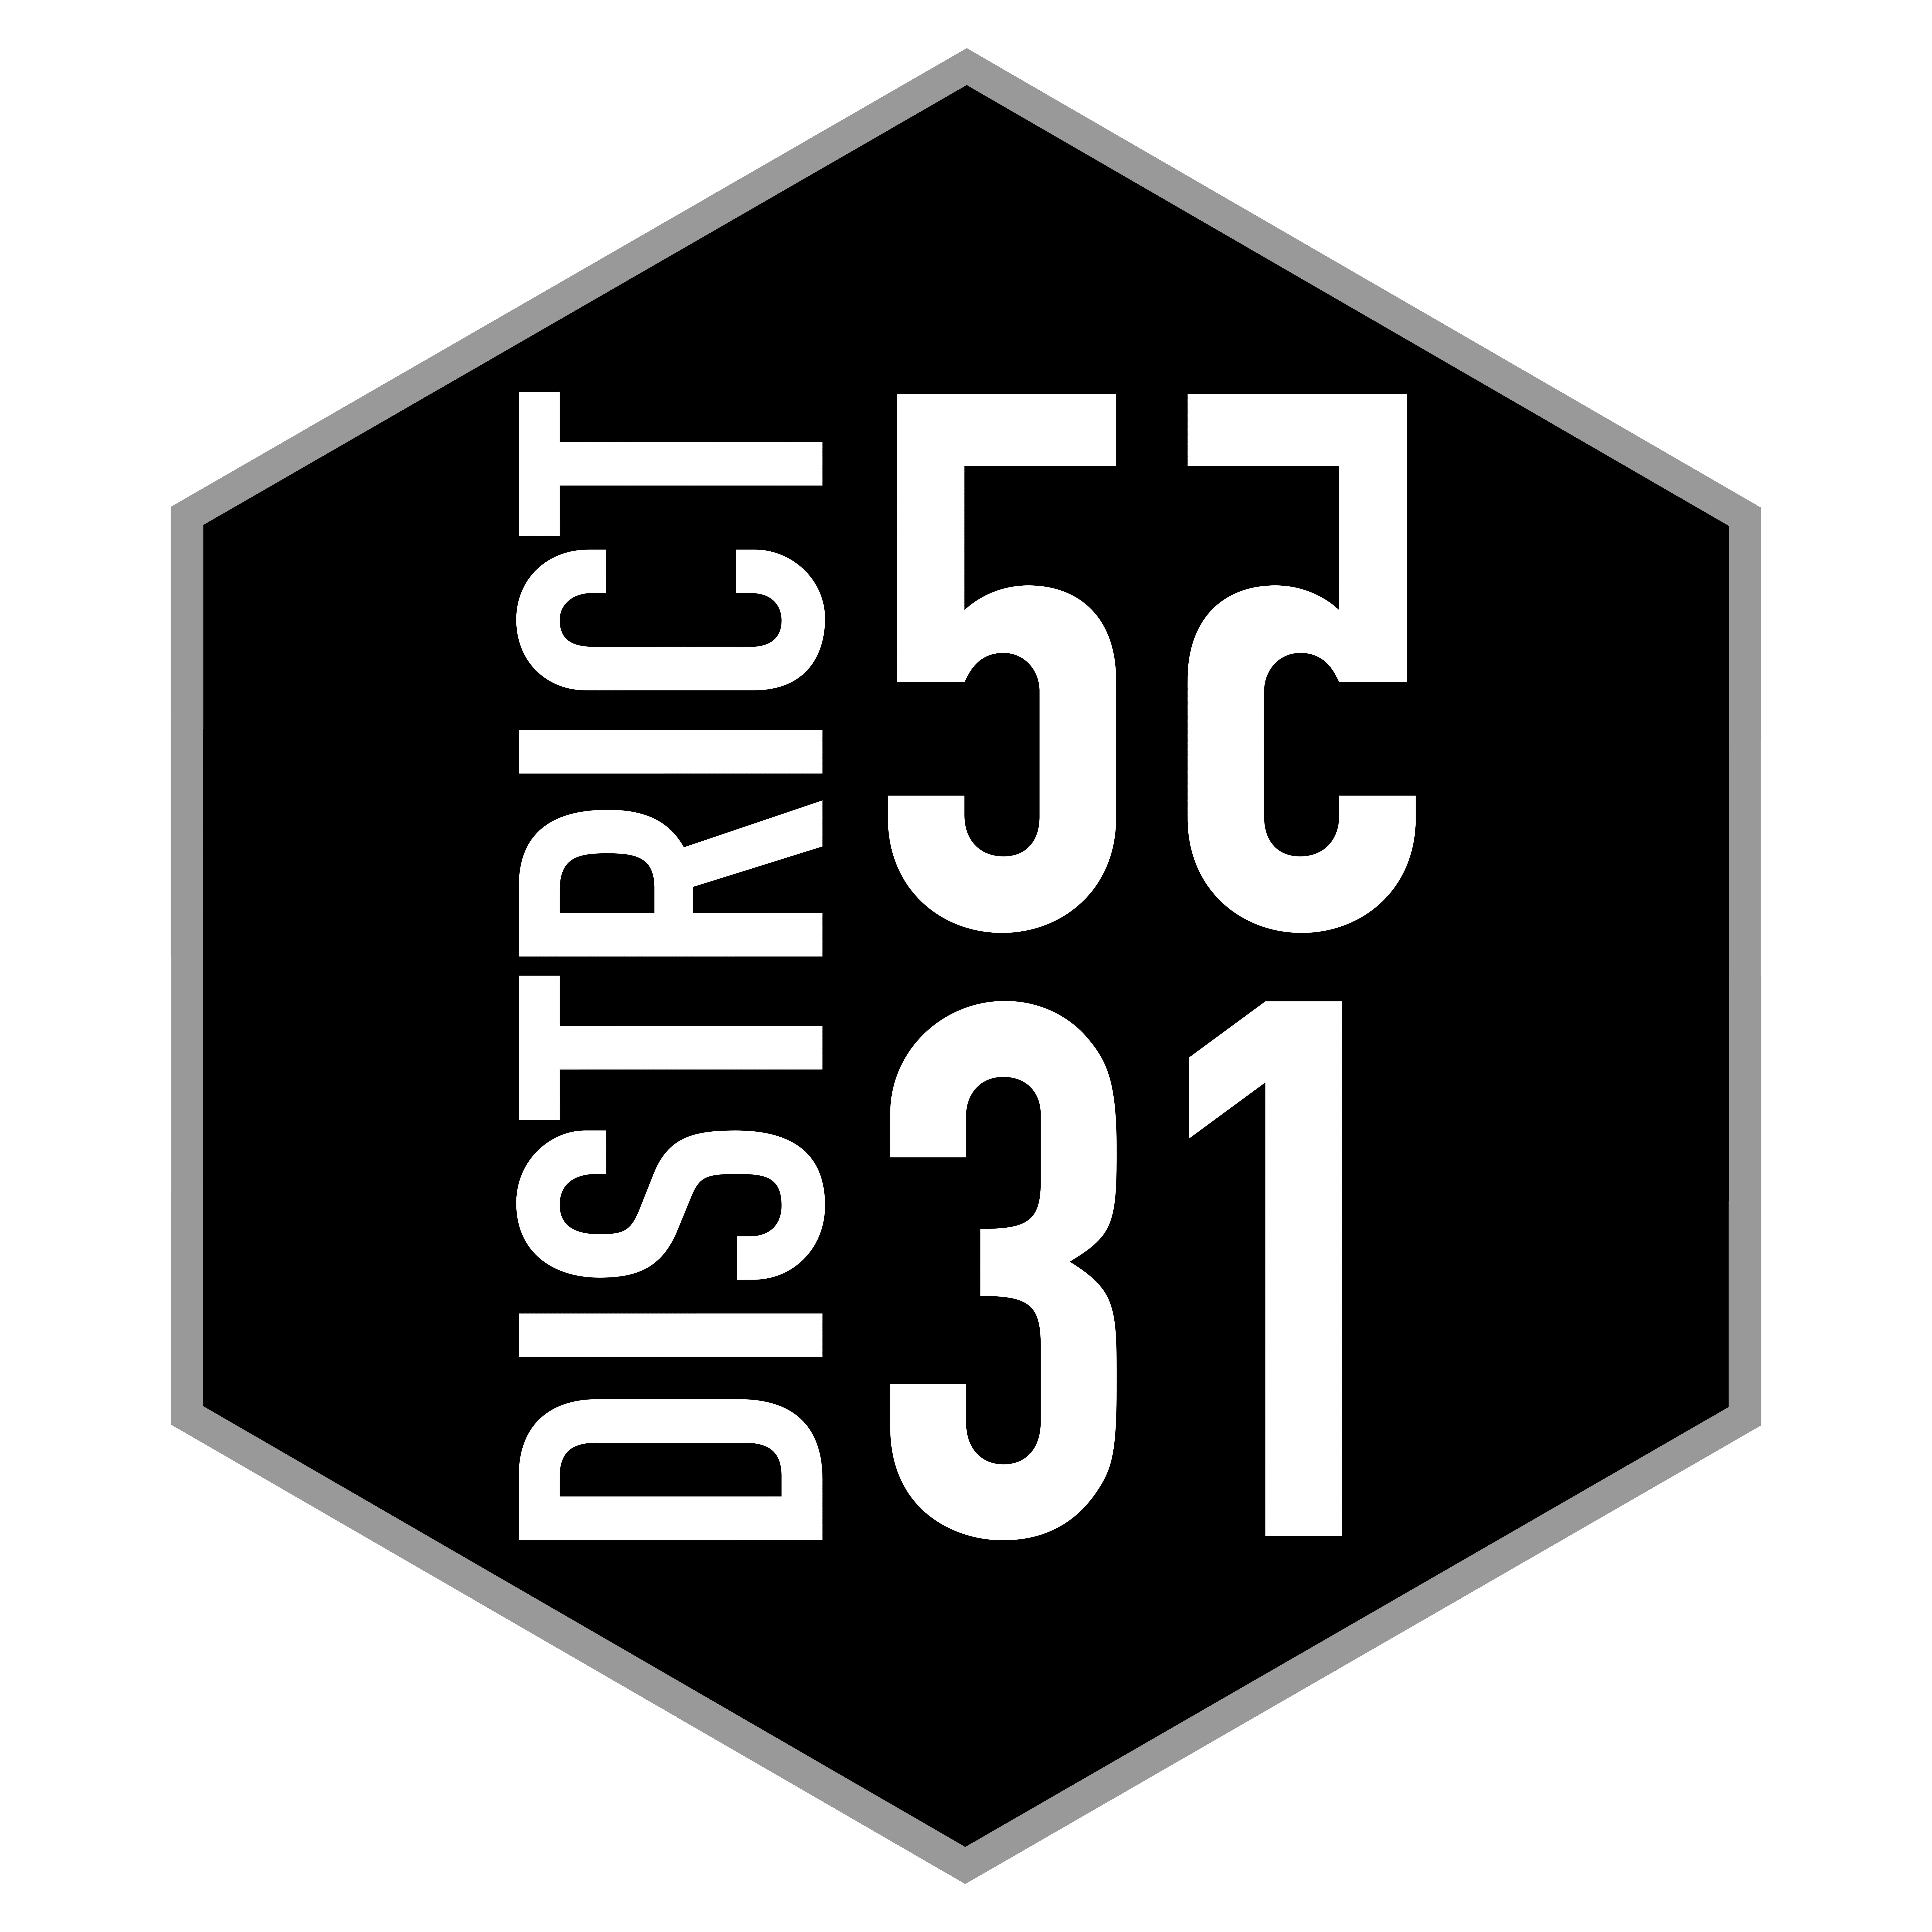 District5531